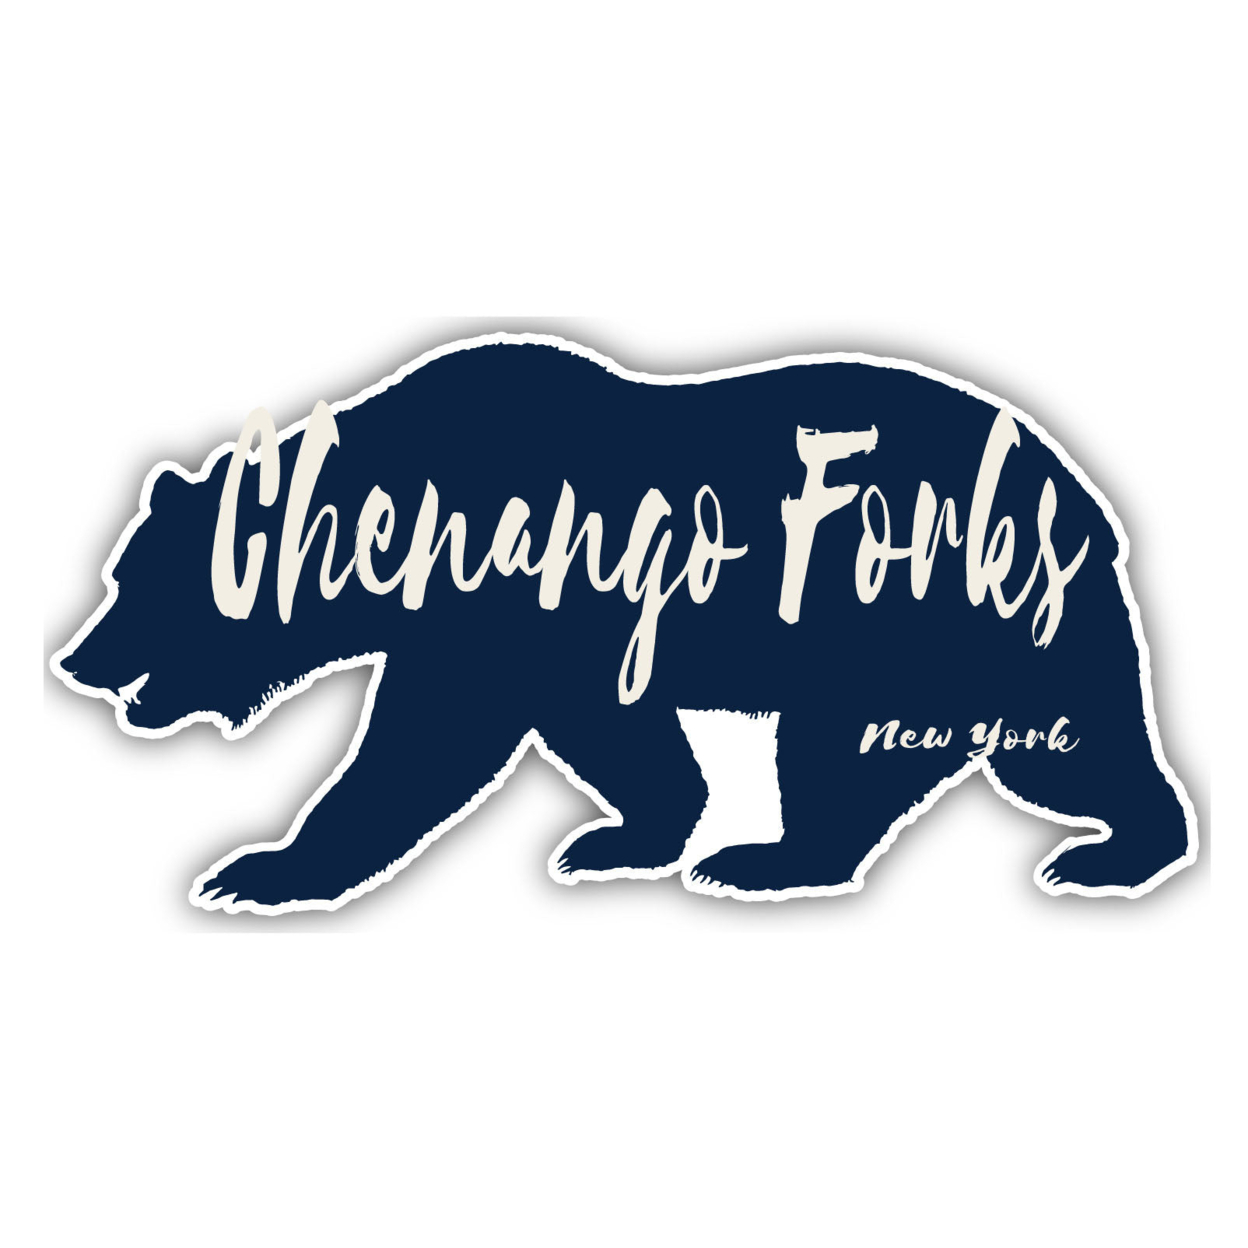 Chenango Forks New York Souvenir Decorative Stickers (Choose Theme And Size) - Single Unit, 4-Inch, Bear